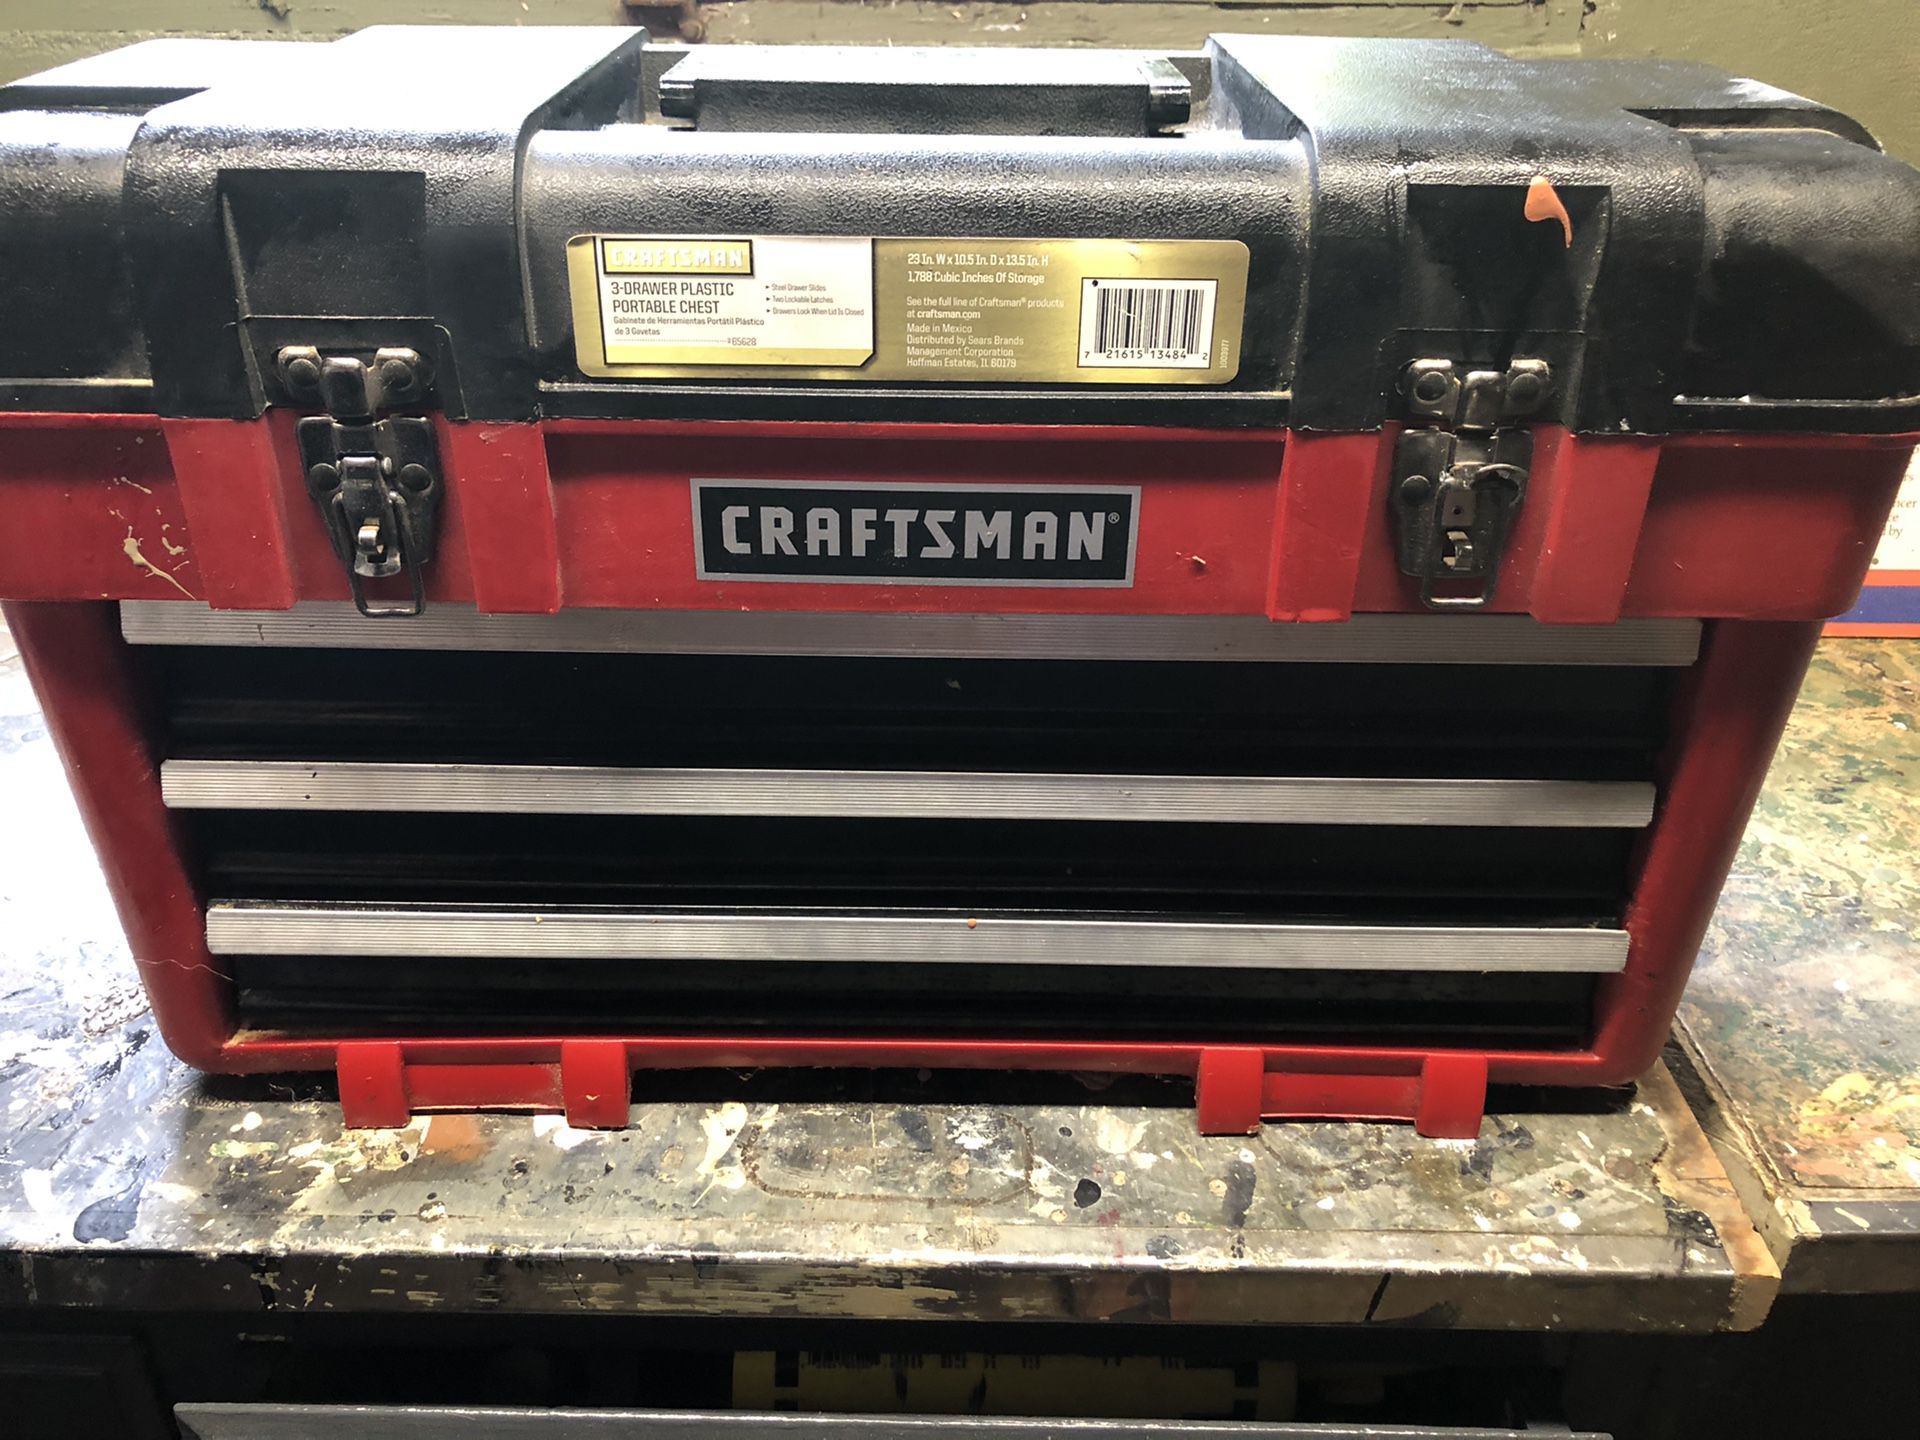 Craftsman 3- drawer plastic portable chest